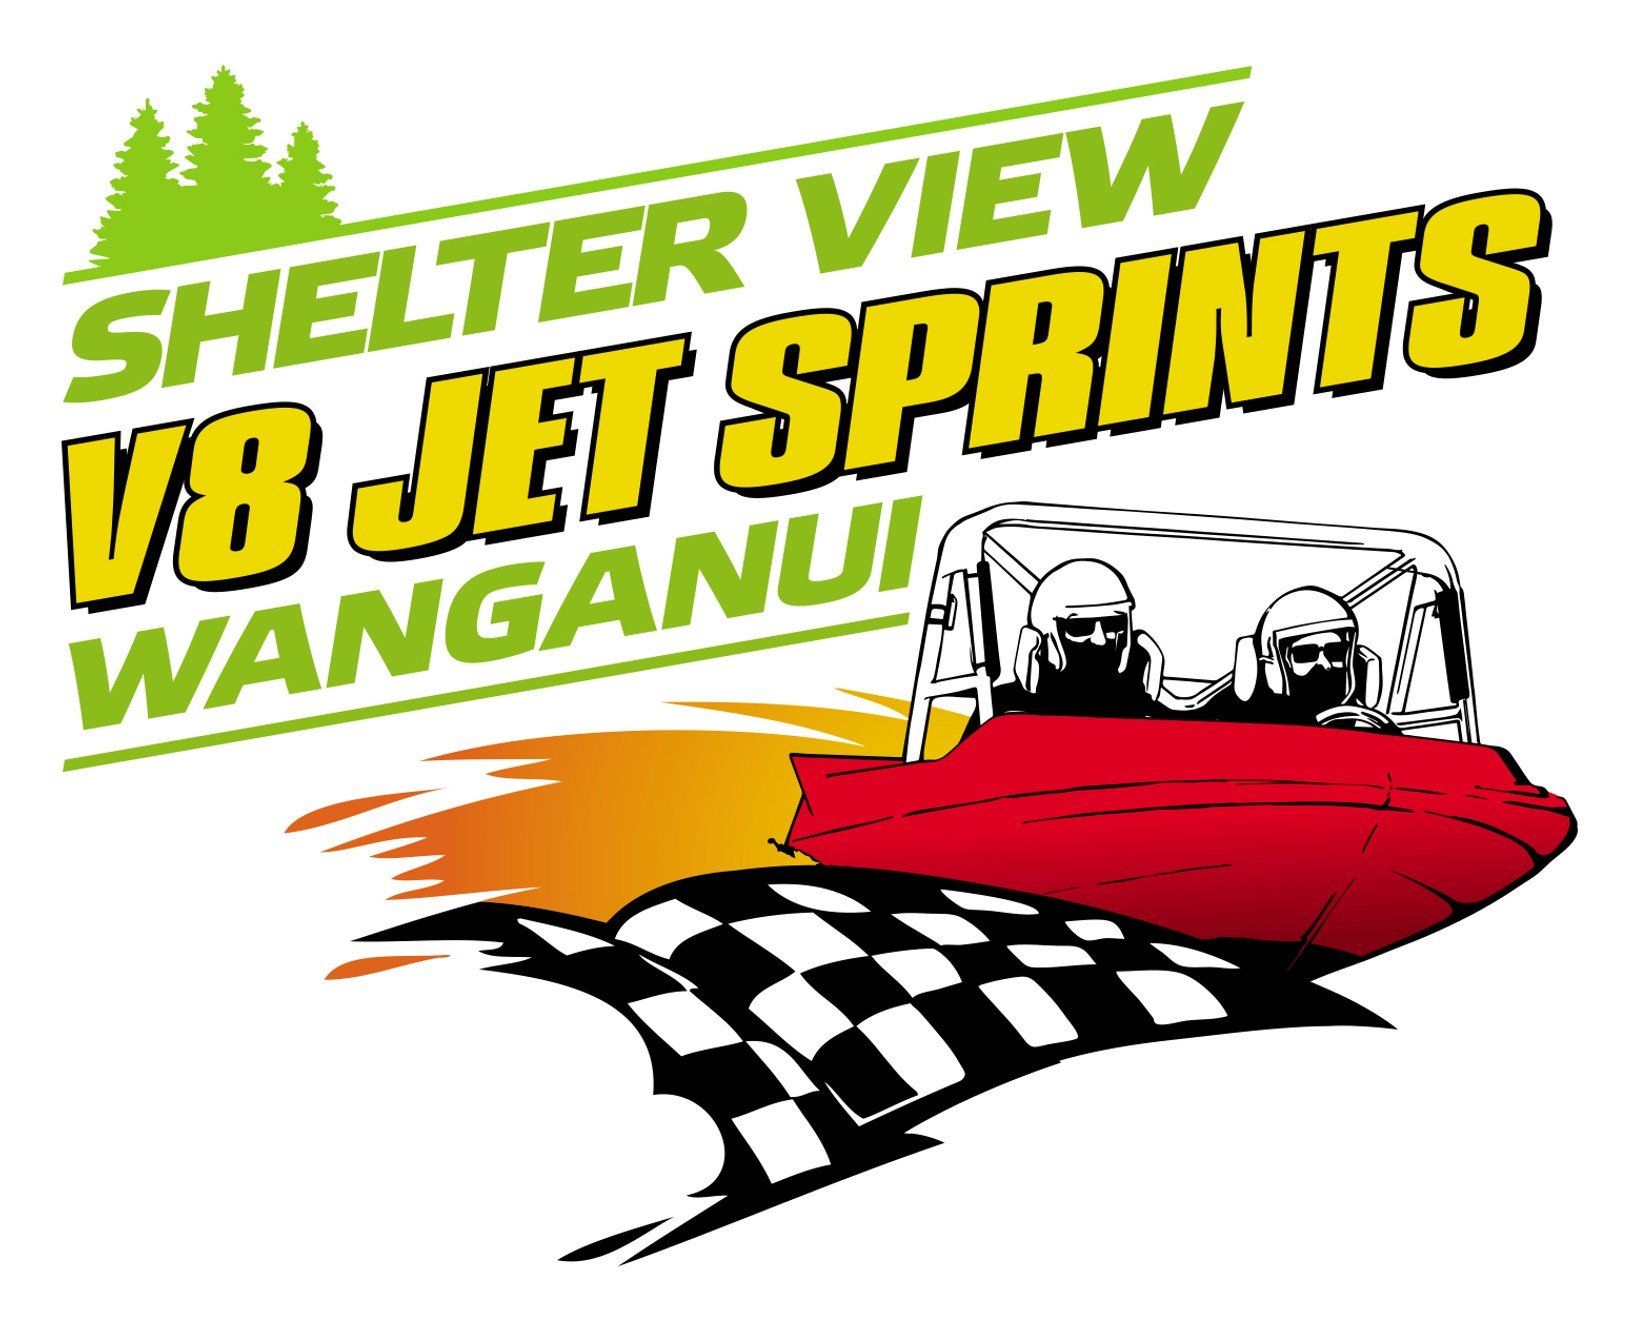 Shelter View Jetsprint Track Wanganui